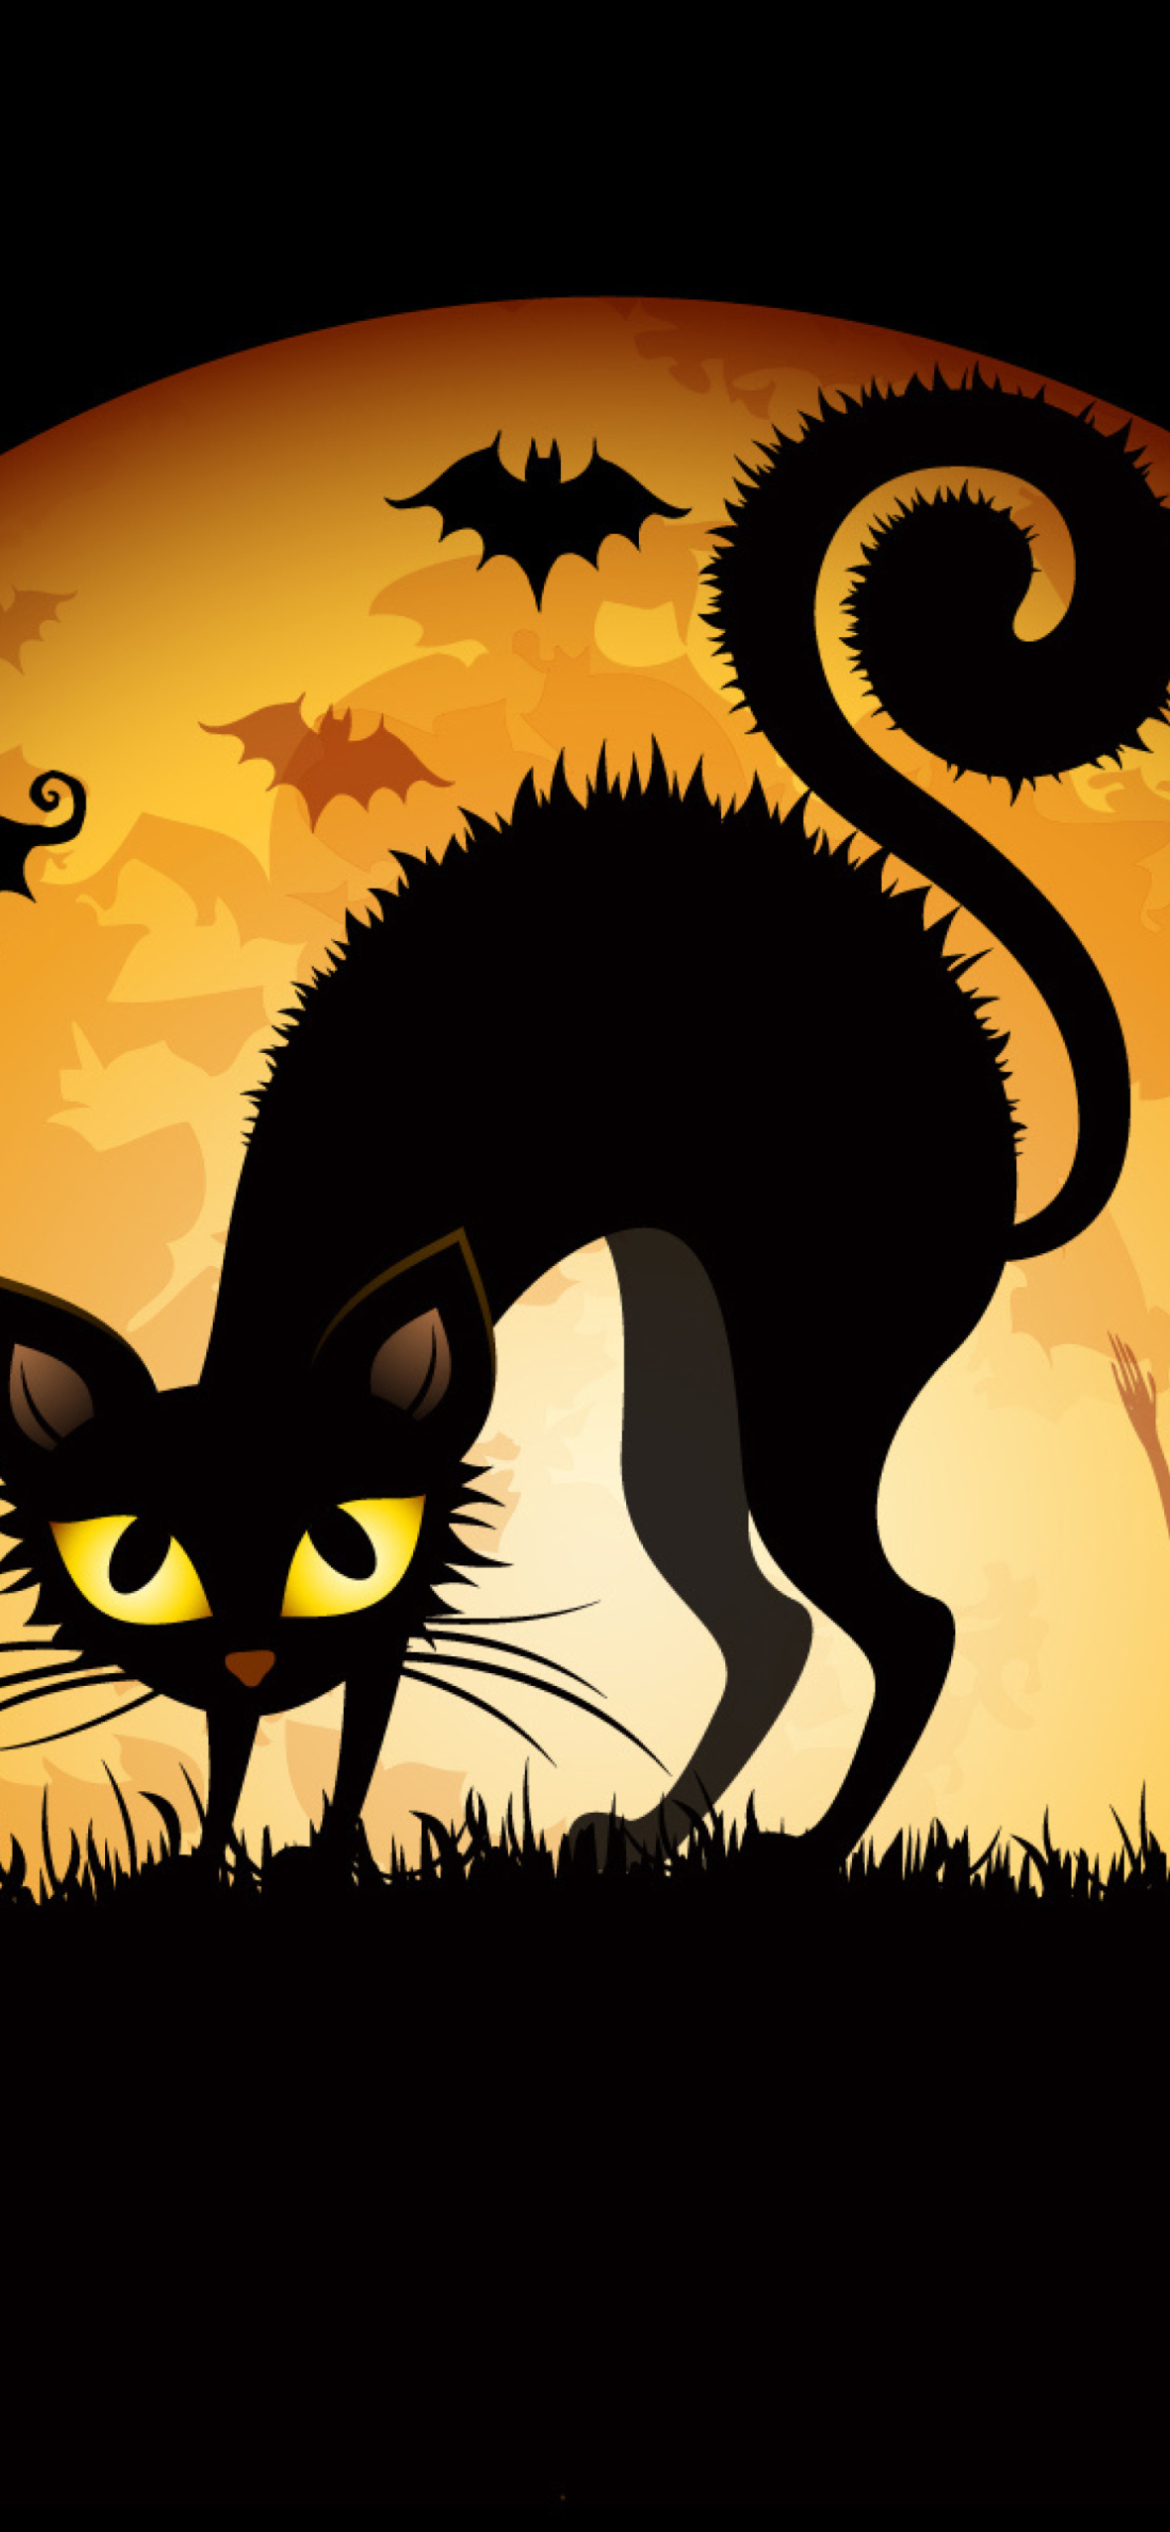 Scary Black Cat wallpaper 1170x2532